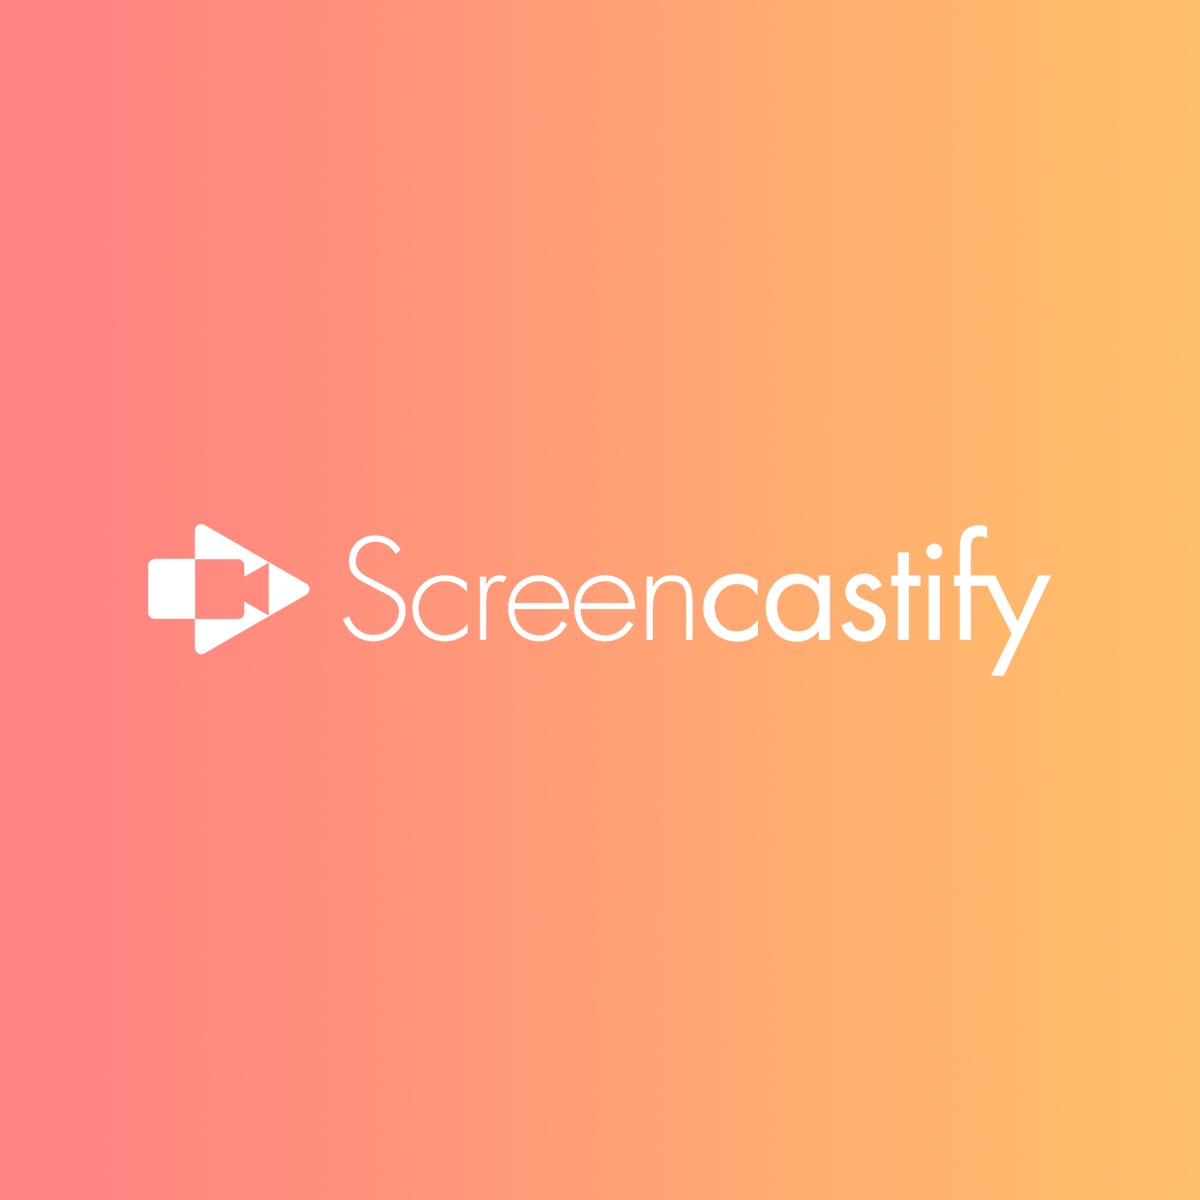 use screencastify on chromebook